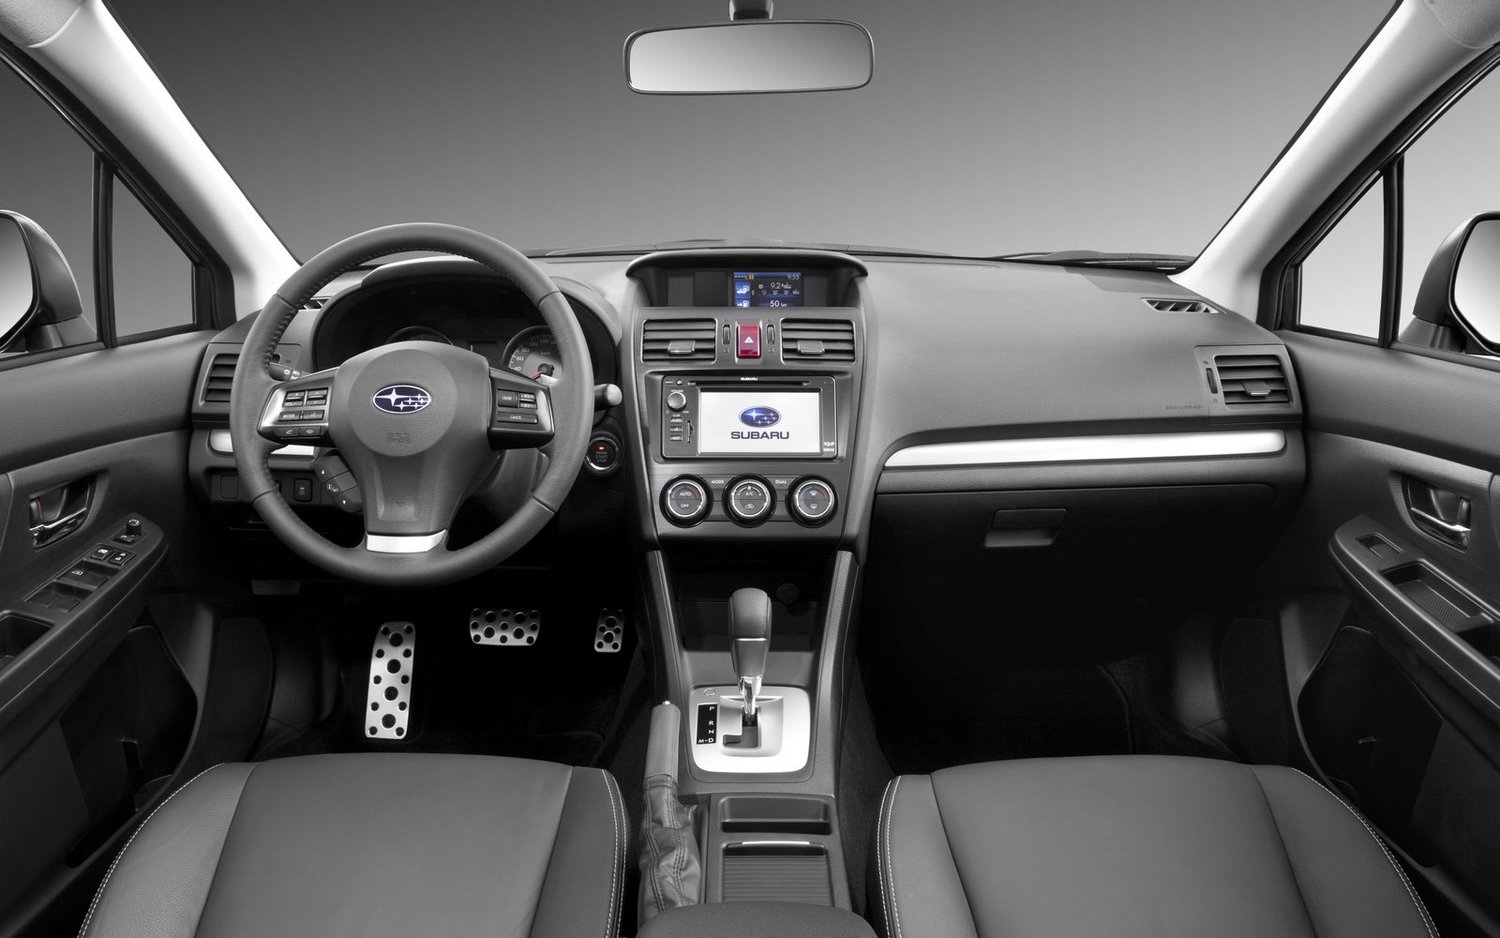 седан Subaru Impreza 2012 - 2014г выпуска модификация 1.6 MT (114 л.с.) 4×4